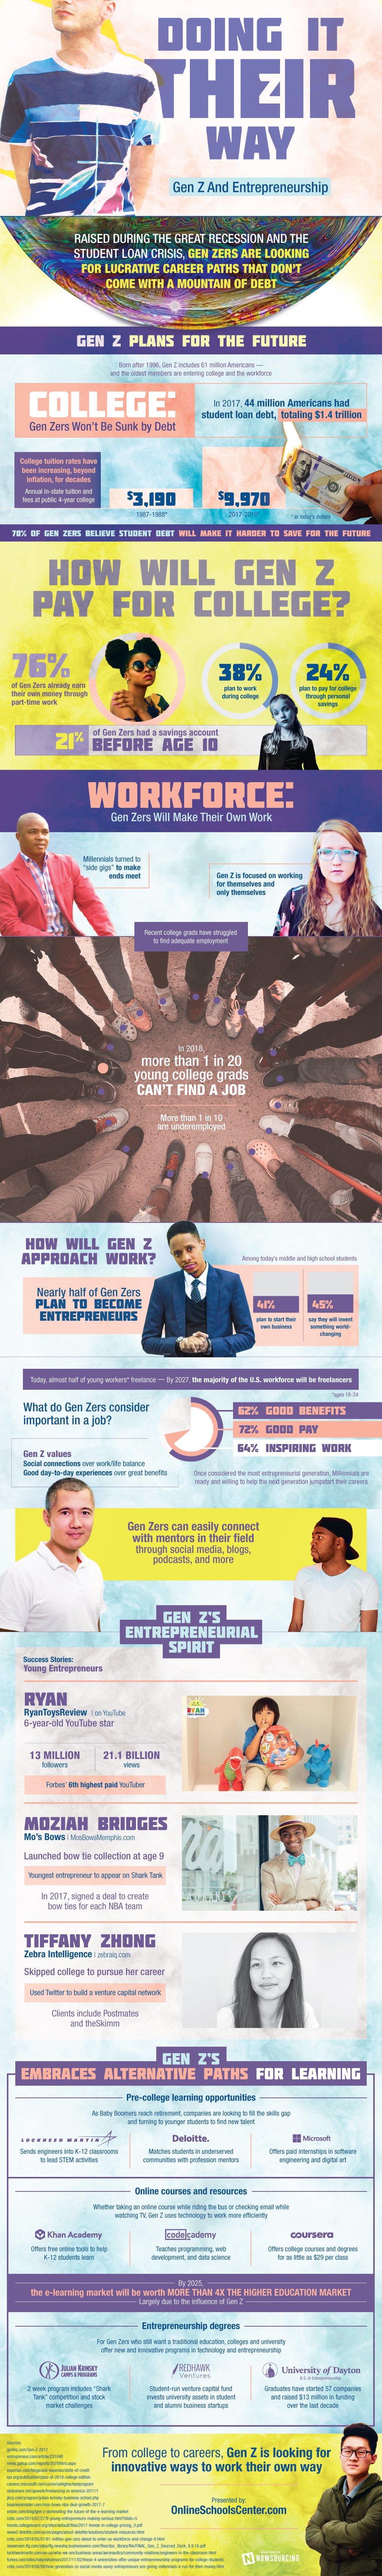 Gen Z The Most Entrepreneurial Generation